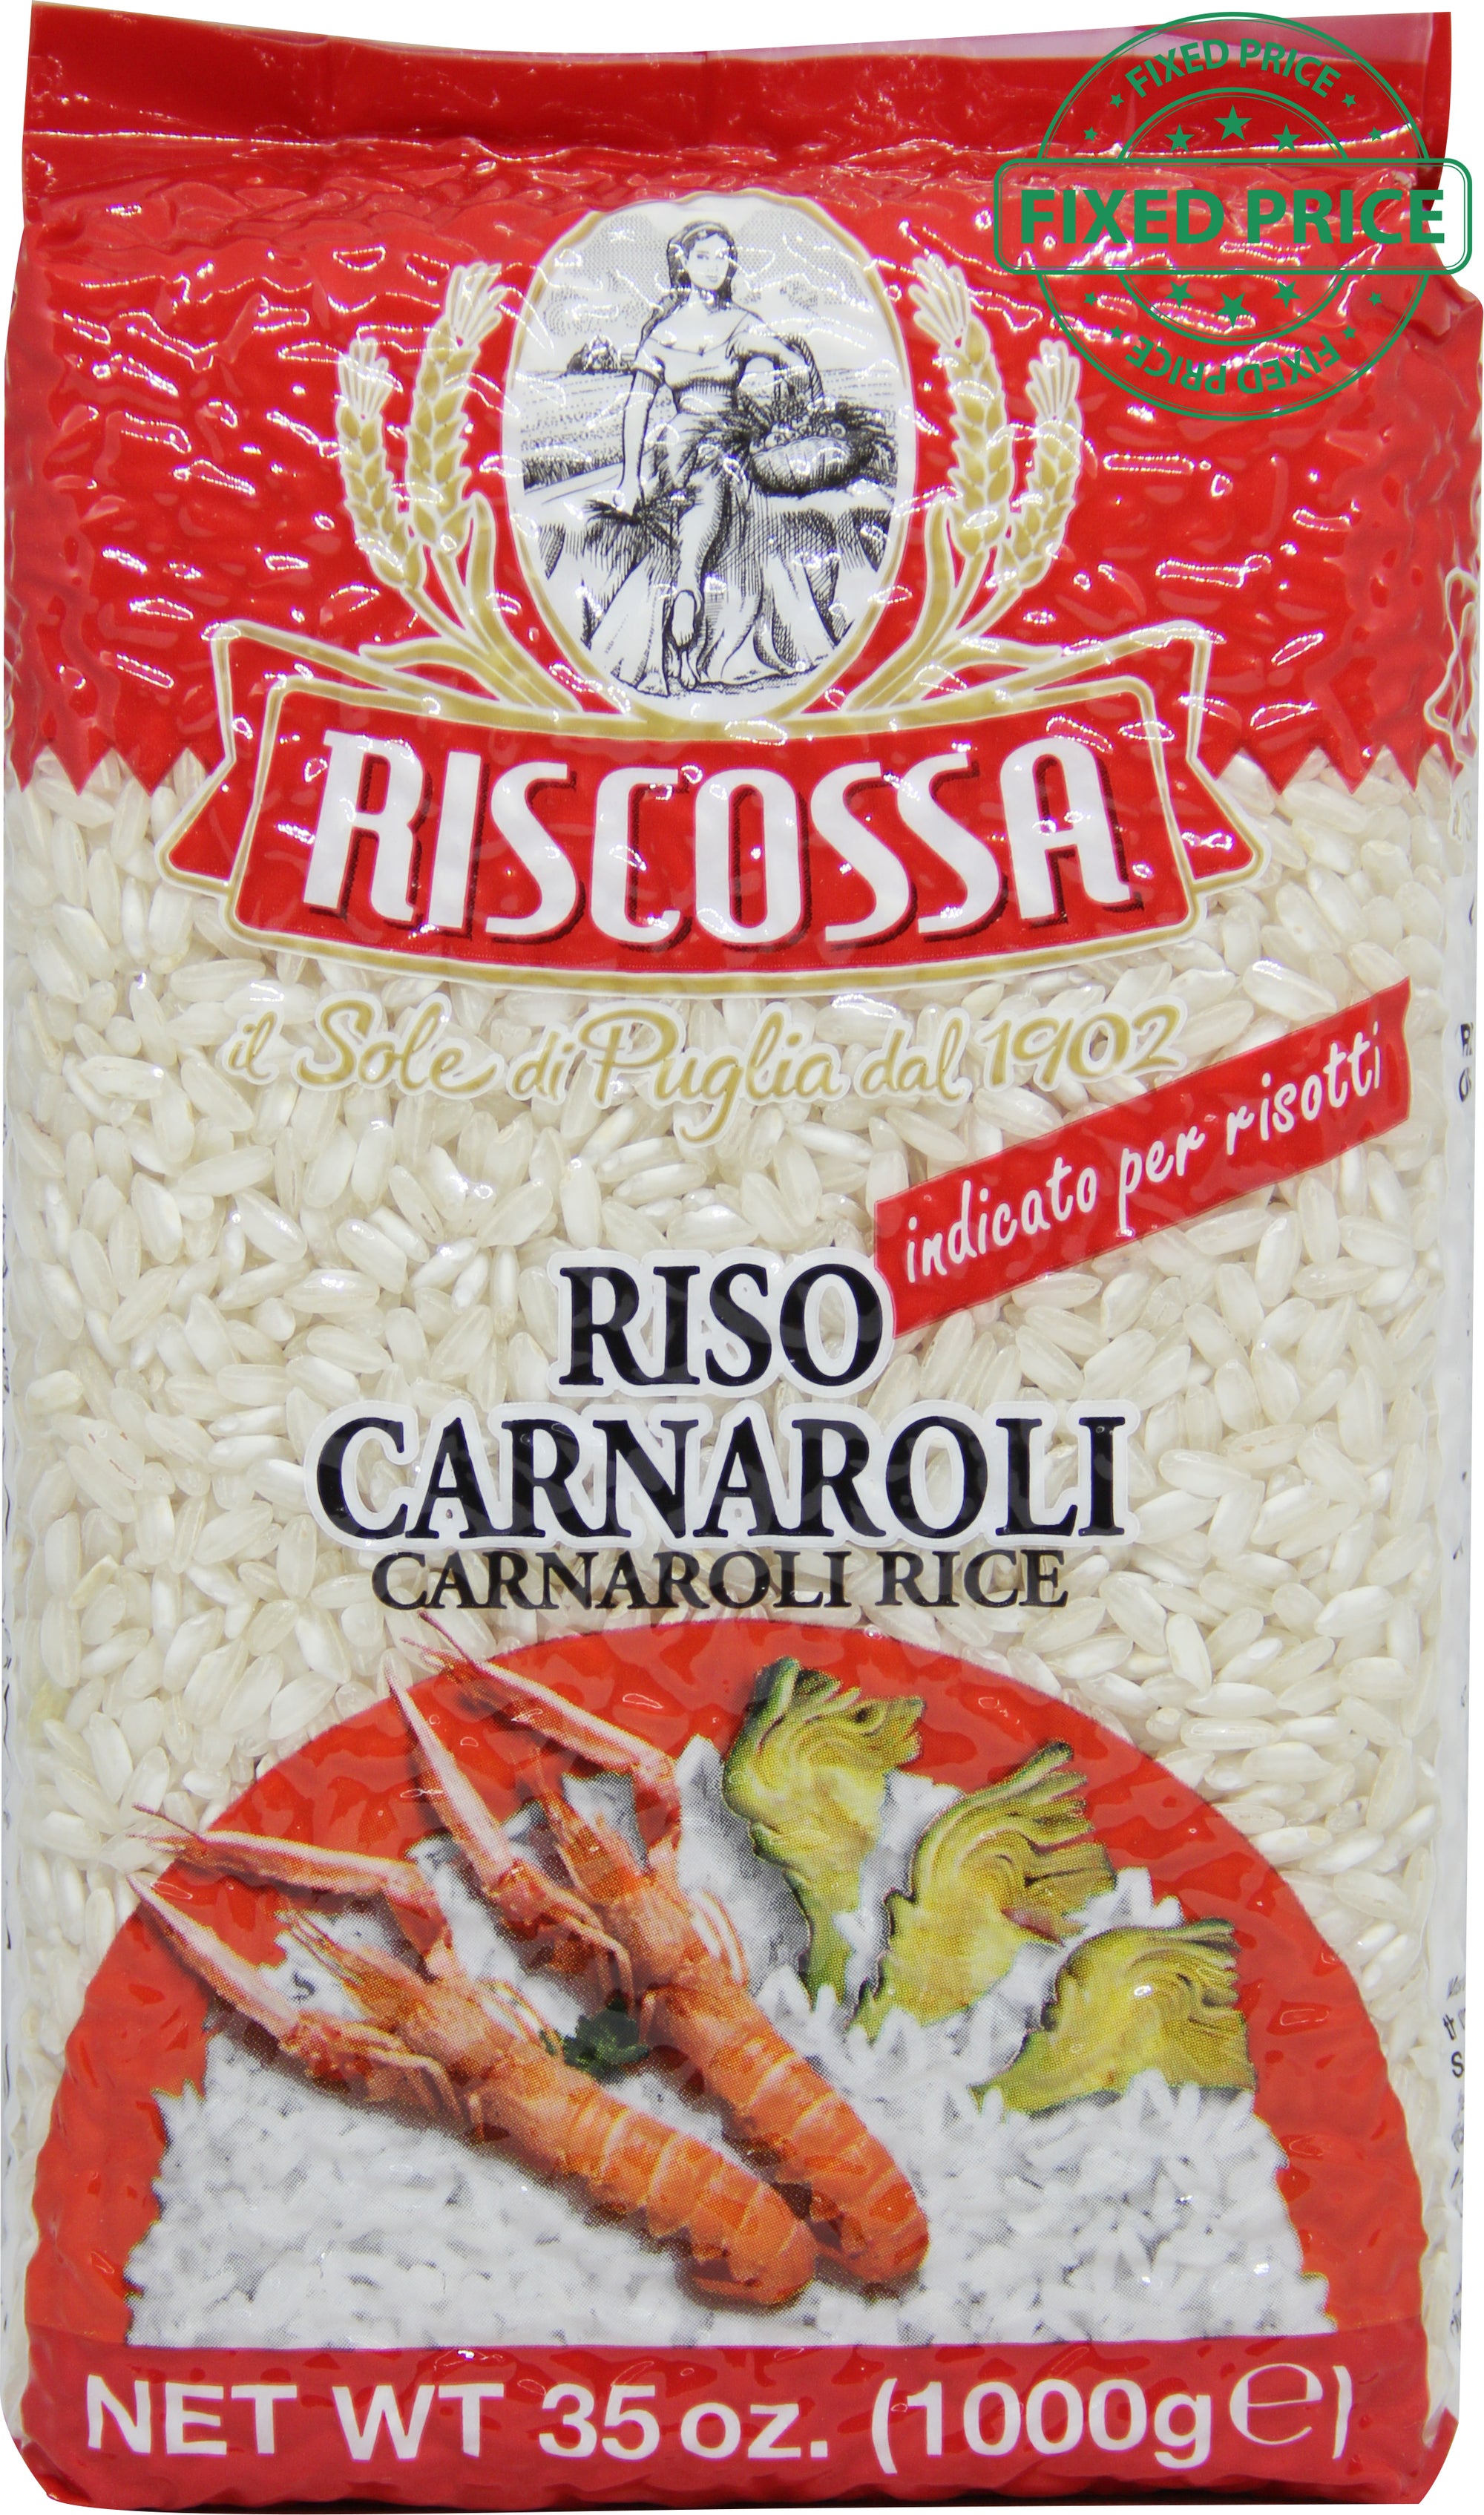 RISCOSSA CARNAROLI RICE 1 Kg - Jet Italian Deli - JID-DR-LO - EWTH - Italian food - Italian grocery - Food delivery - Thailand - Wine - Truffle - Pasta - Cheese